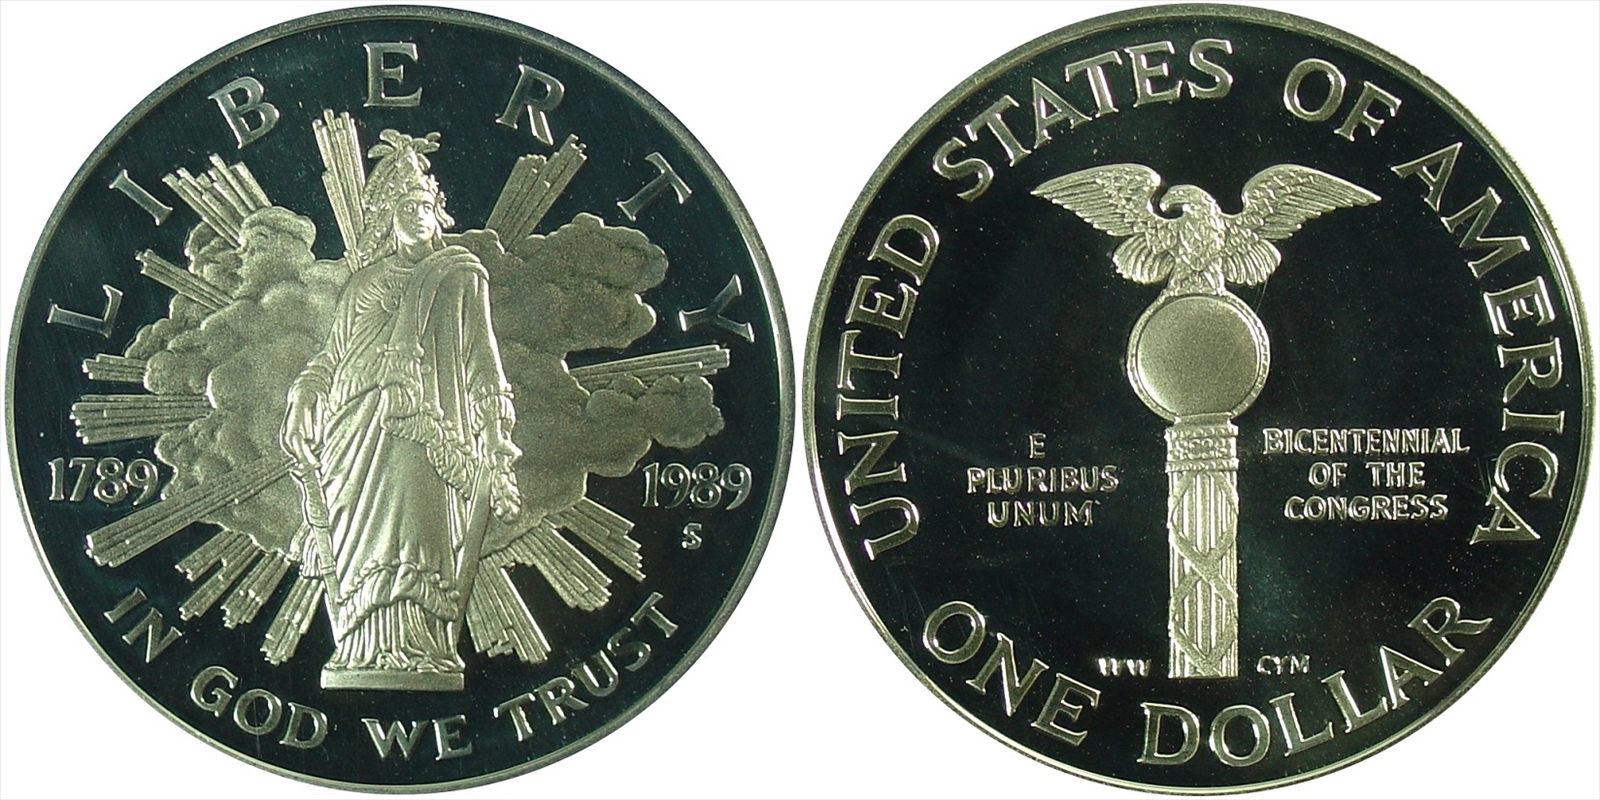 Madison Modern Commemorative Silver Dollar Proof 1993-S $1 Bill of Rights J